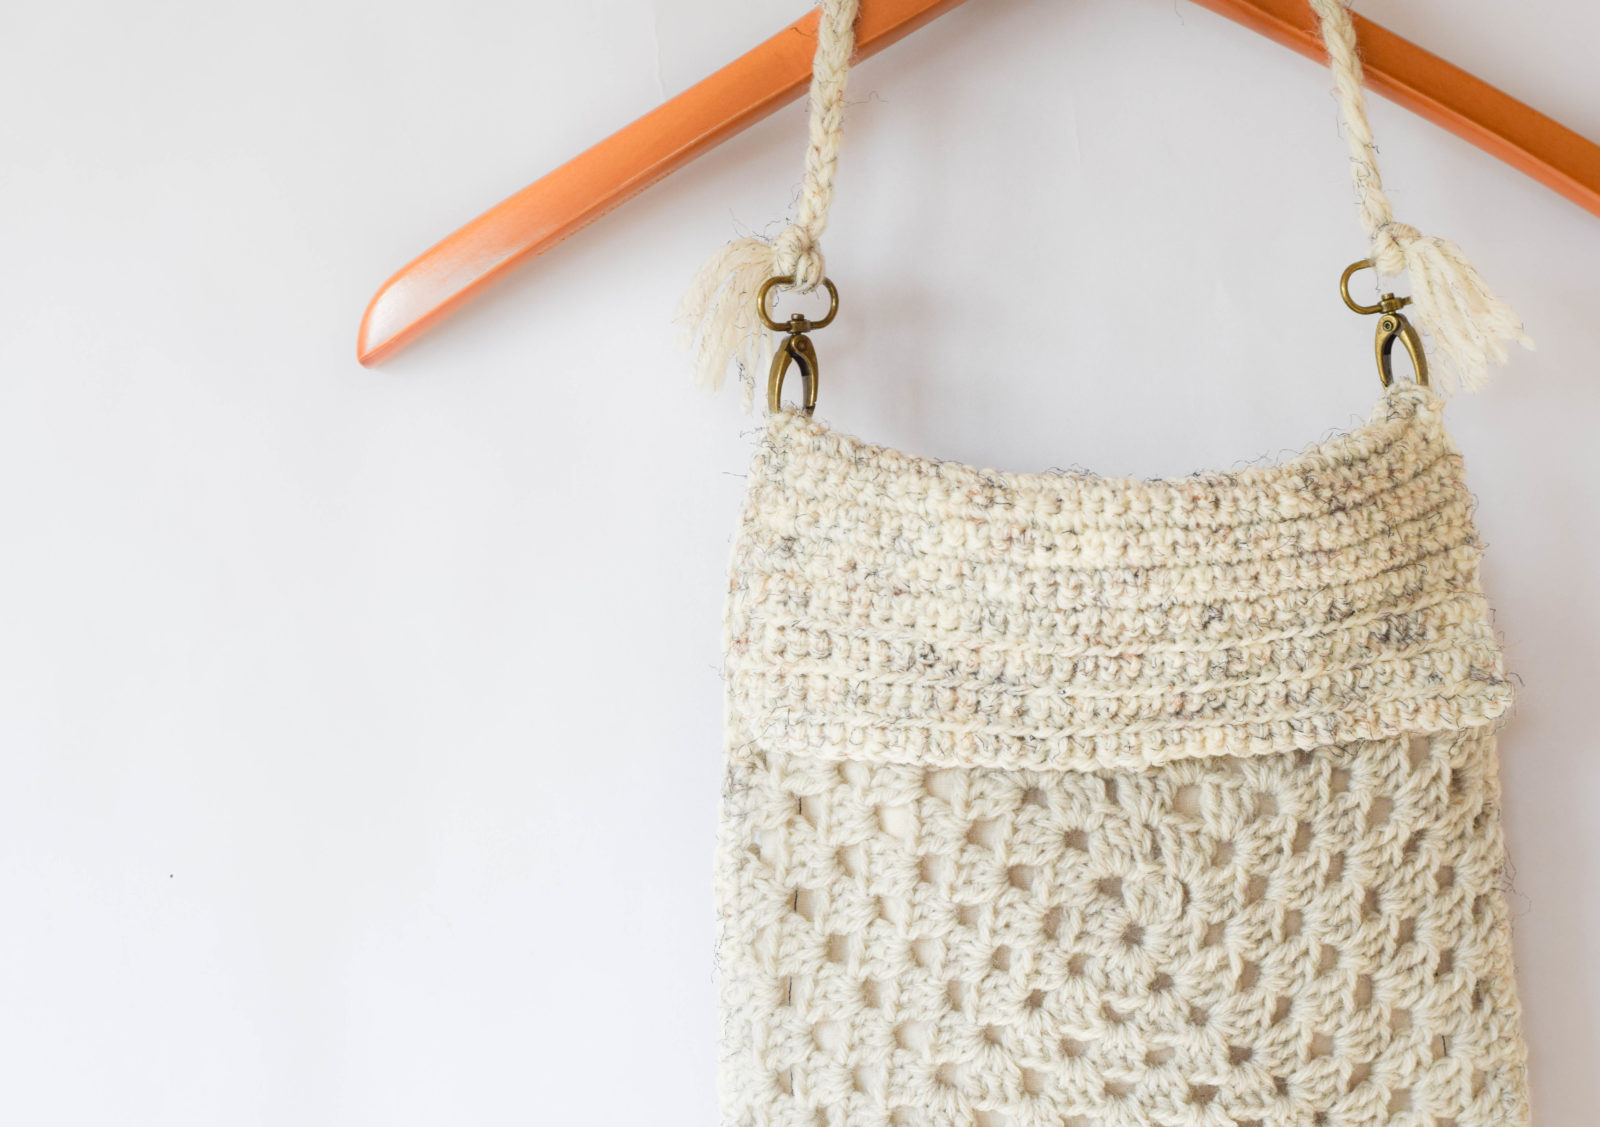 Simple Crochet Tote Bag Tutorial - YouTube